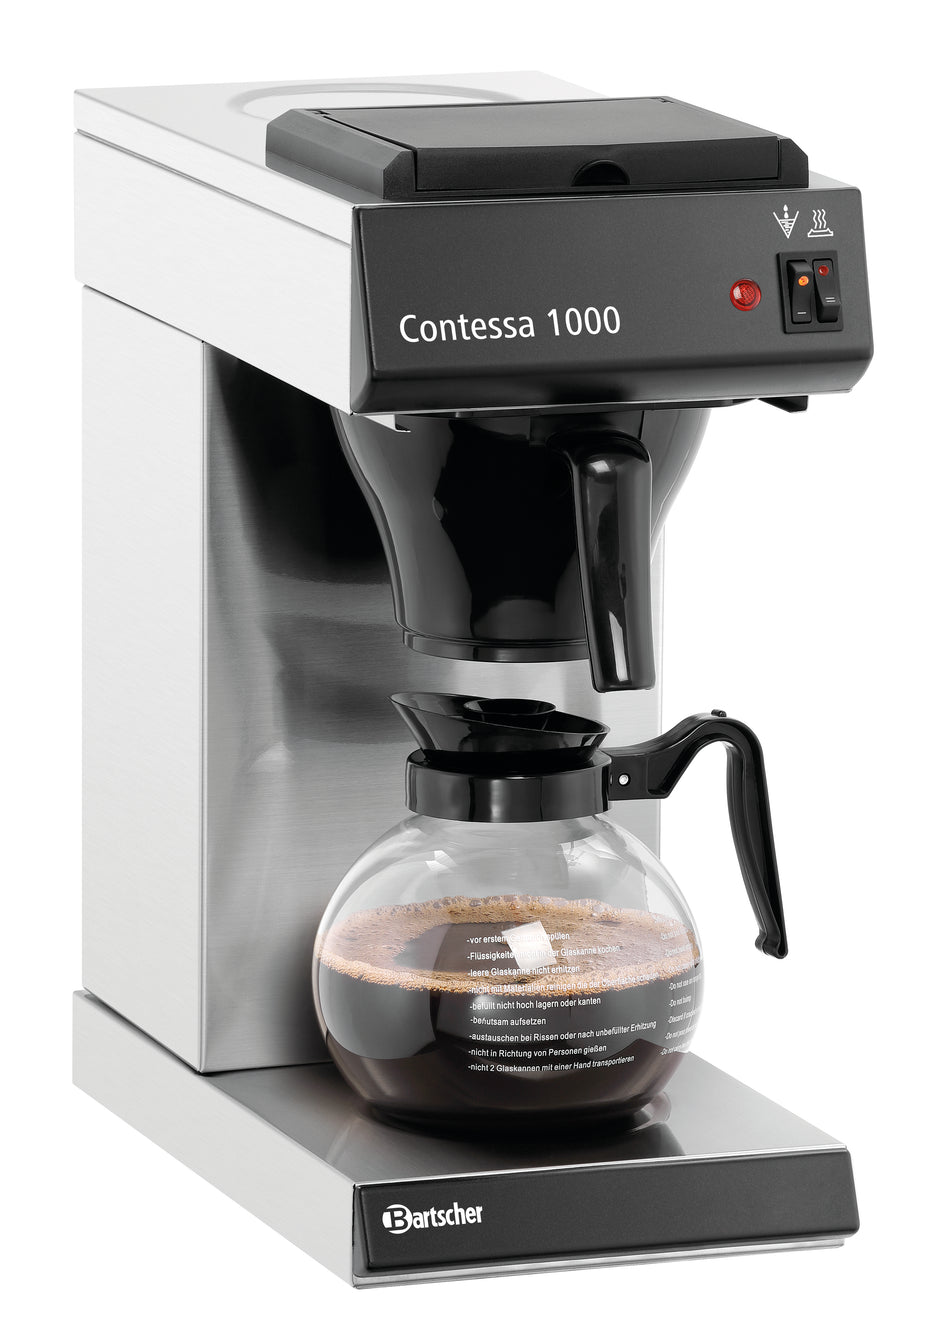 Bartcsher Contessa 1000 Pour Over Coffee Machine